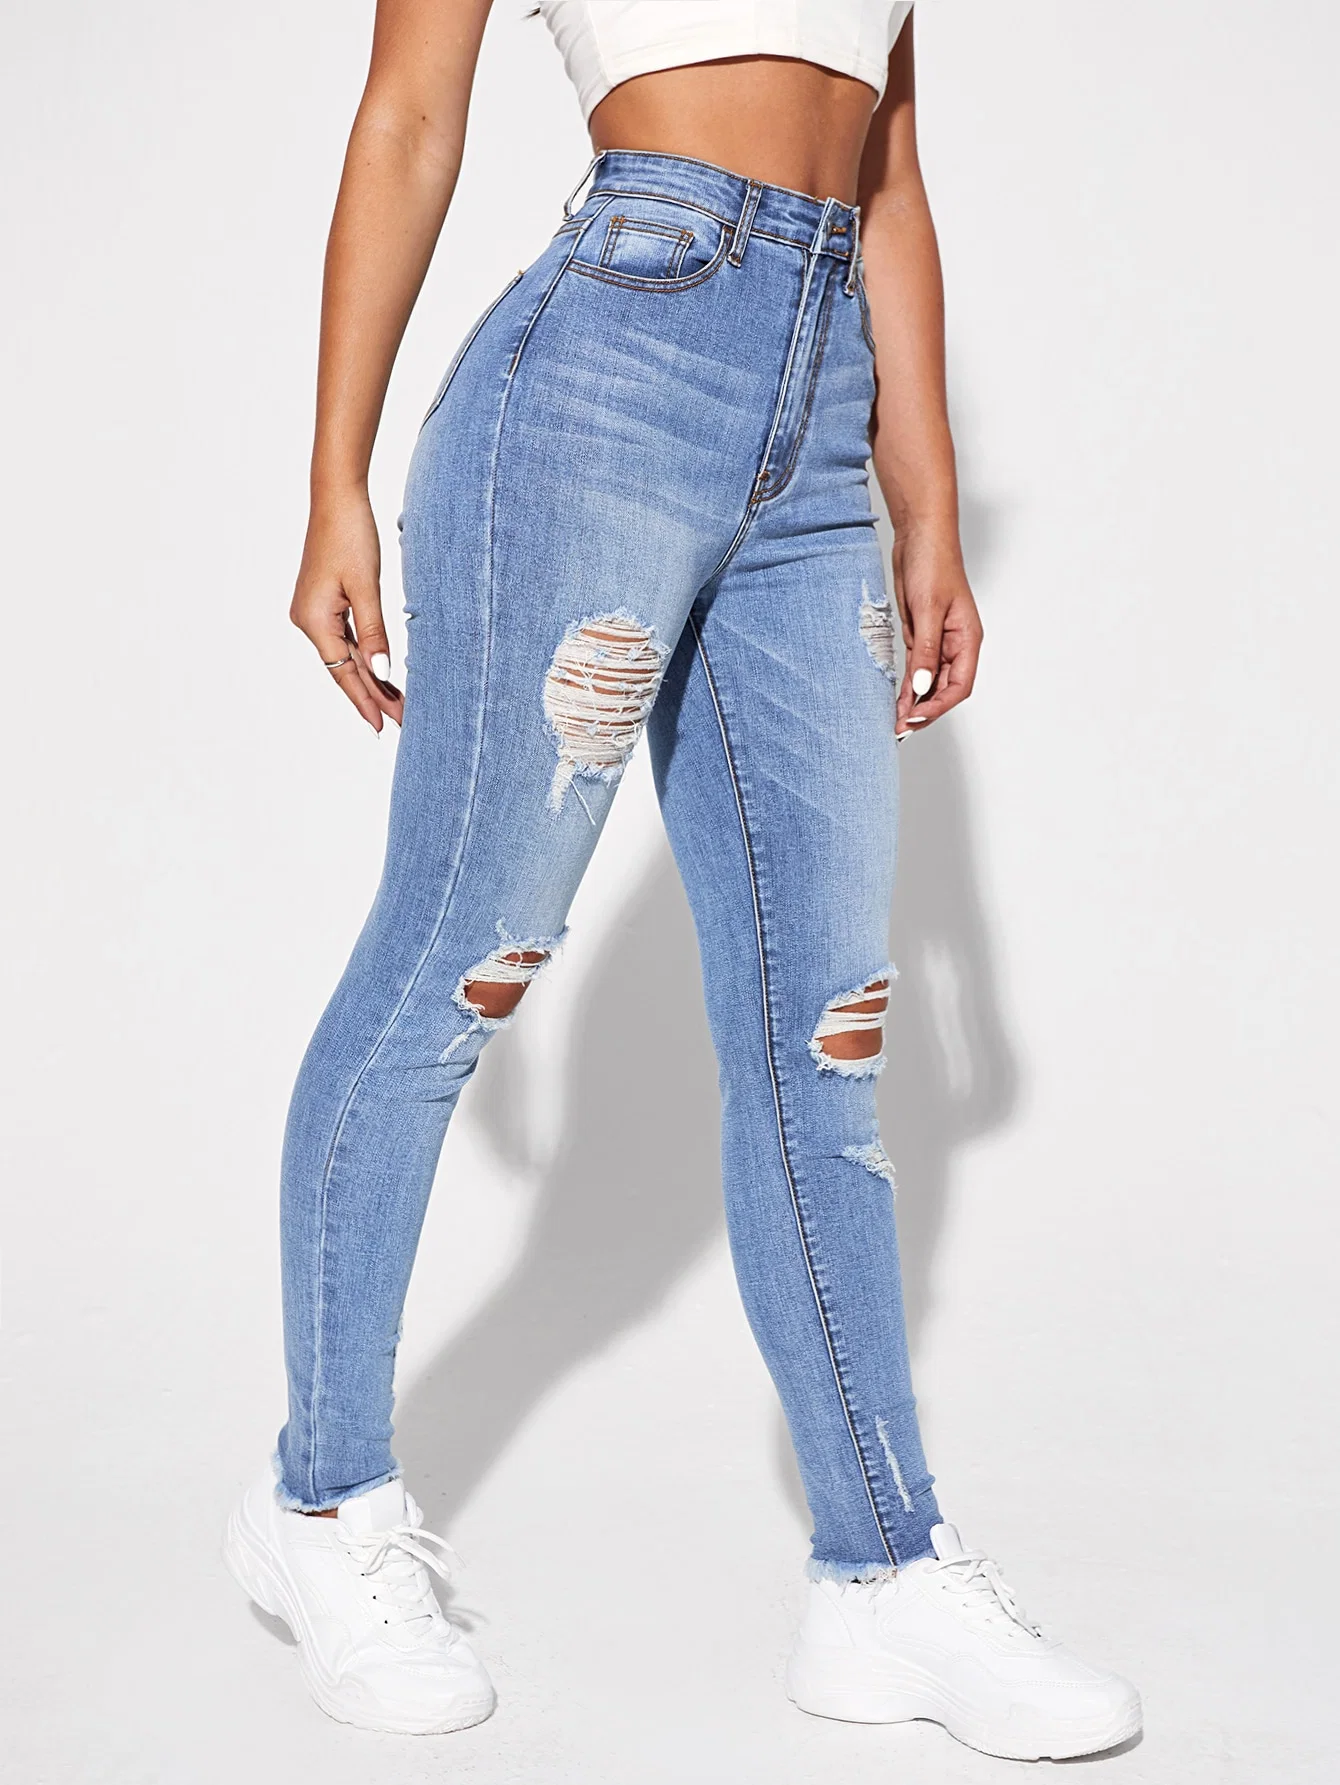 New Fashion Lady Jeans High Waisted Scratch Holes and Raw Edge Bottom Hem Stretch Quality OEM&ODM Slim Fitting Jeans